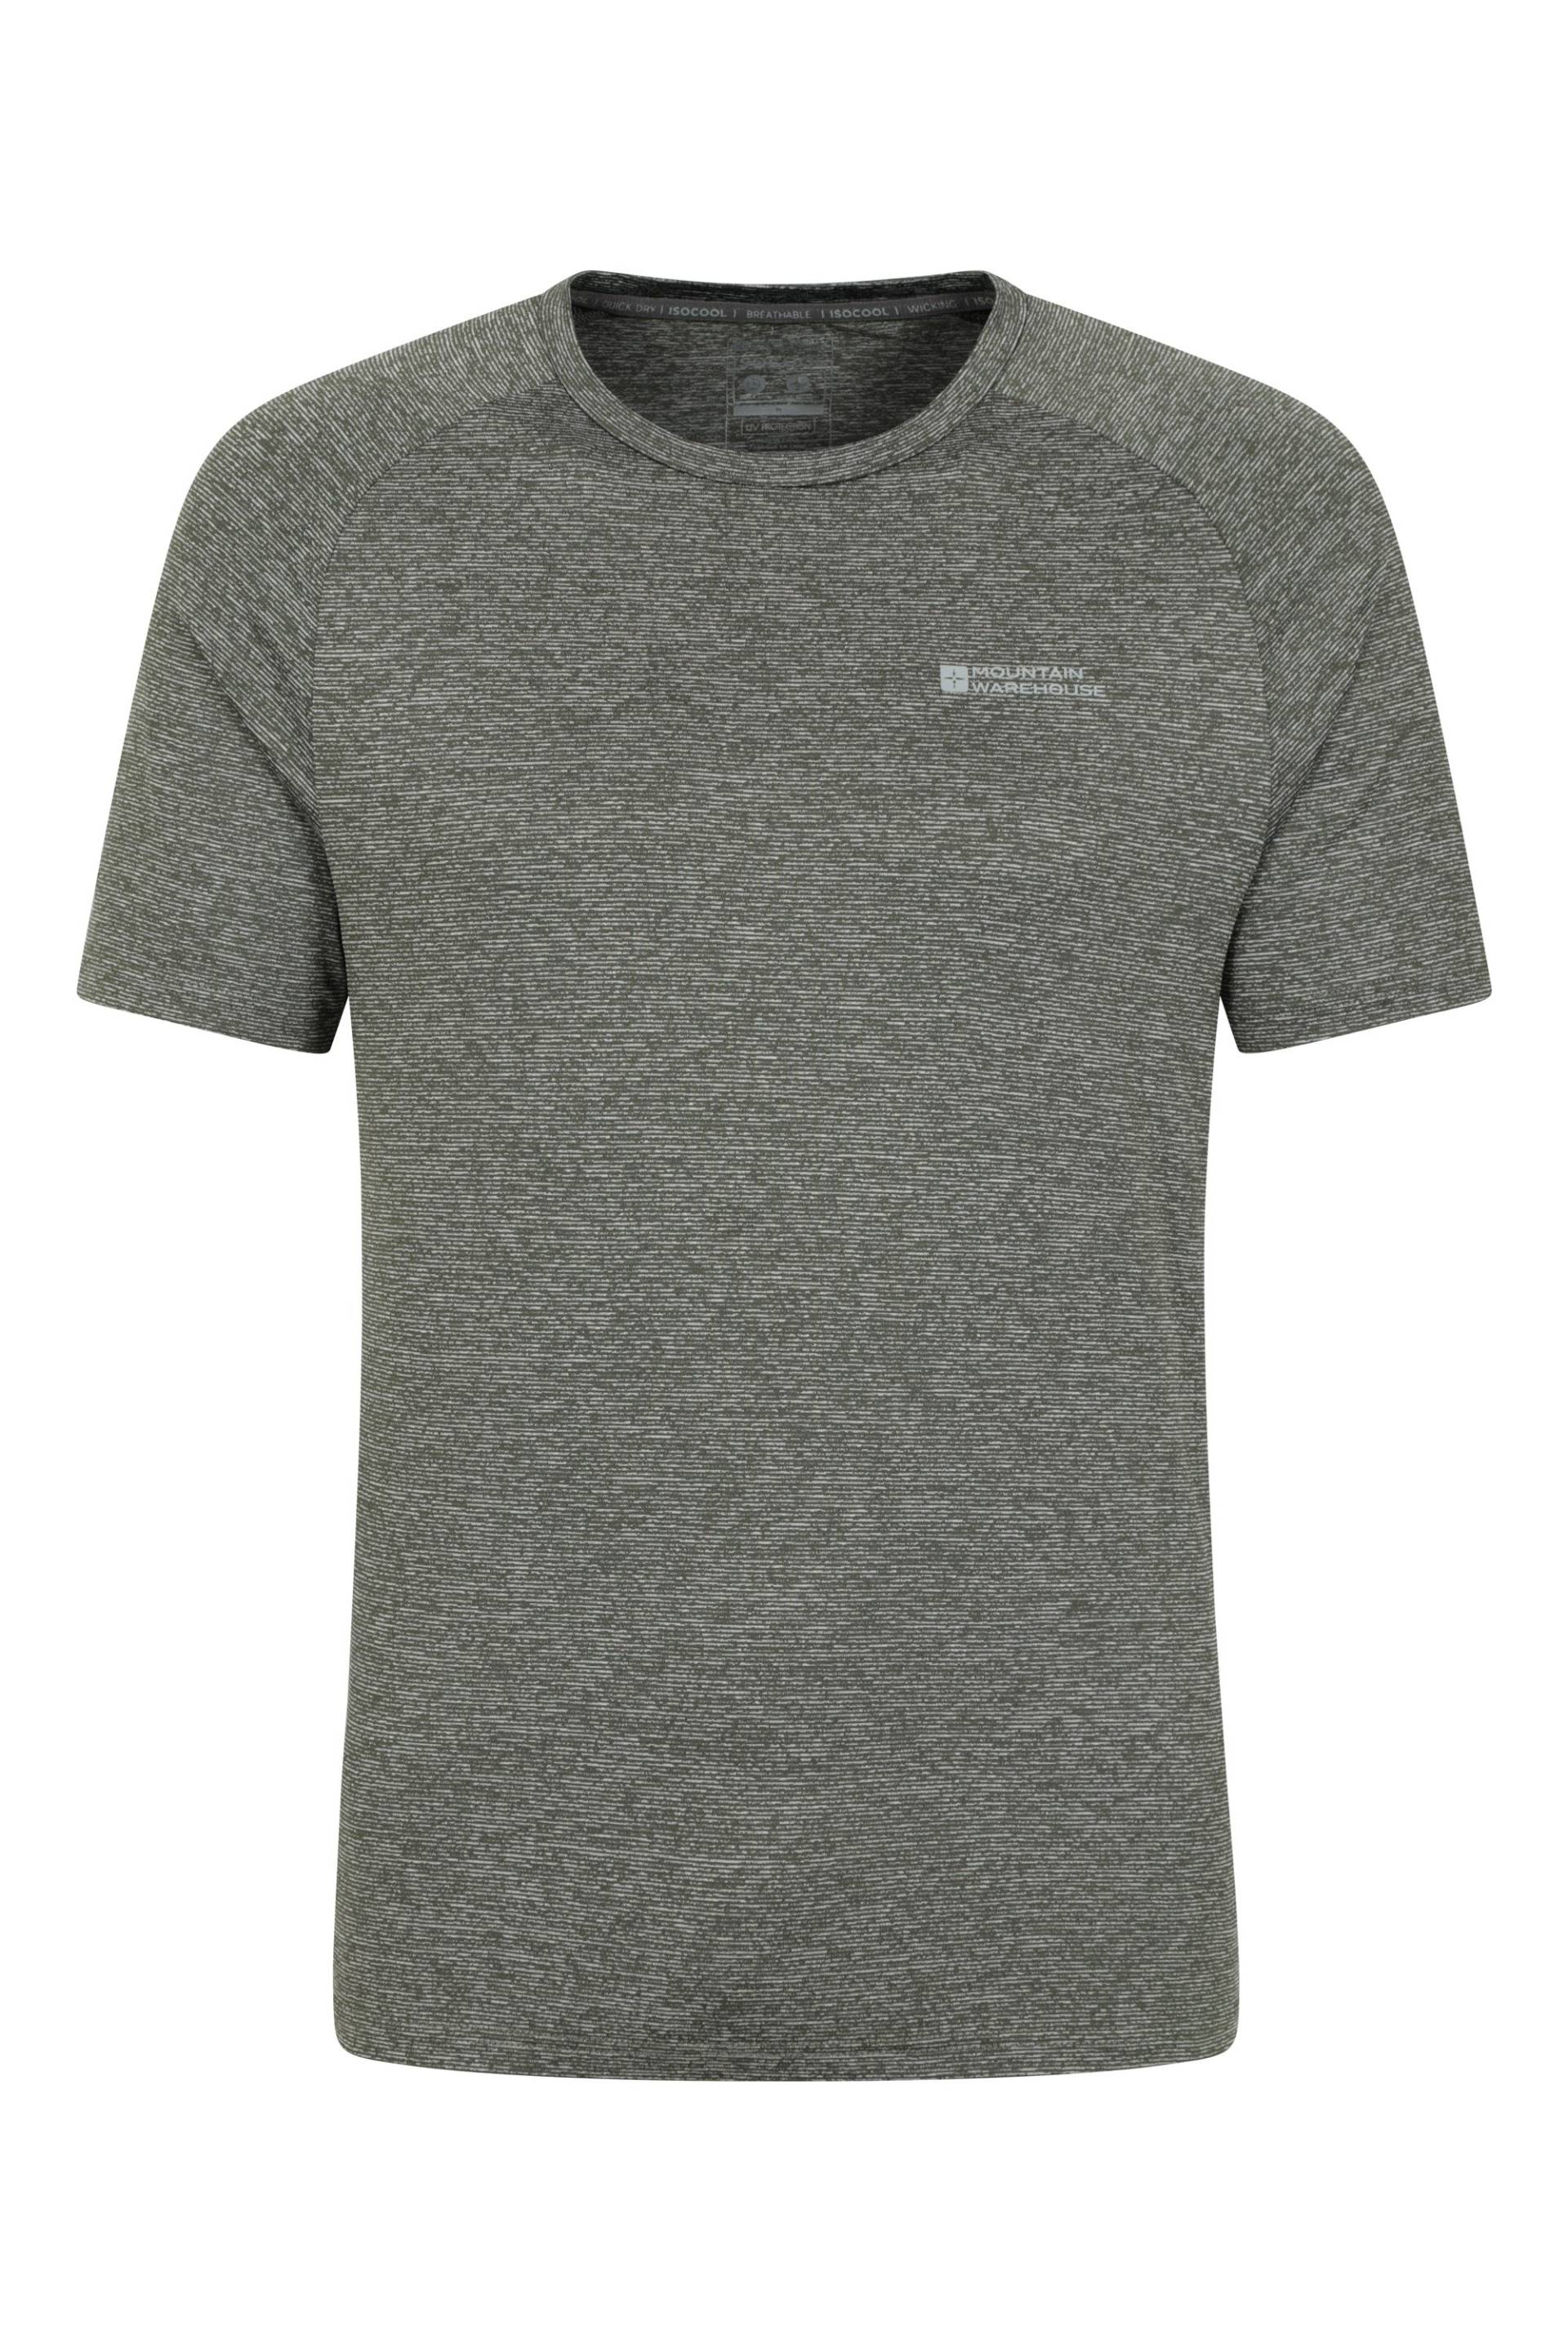 Agra IsoCool Gestreiftes Herren T-Shirt - Dunkel-Khaki von Mountain Warehouse